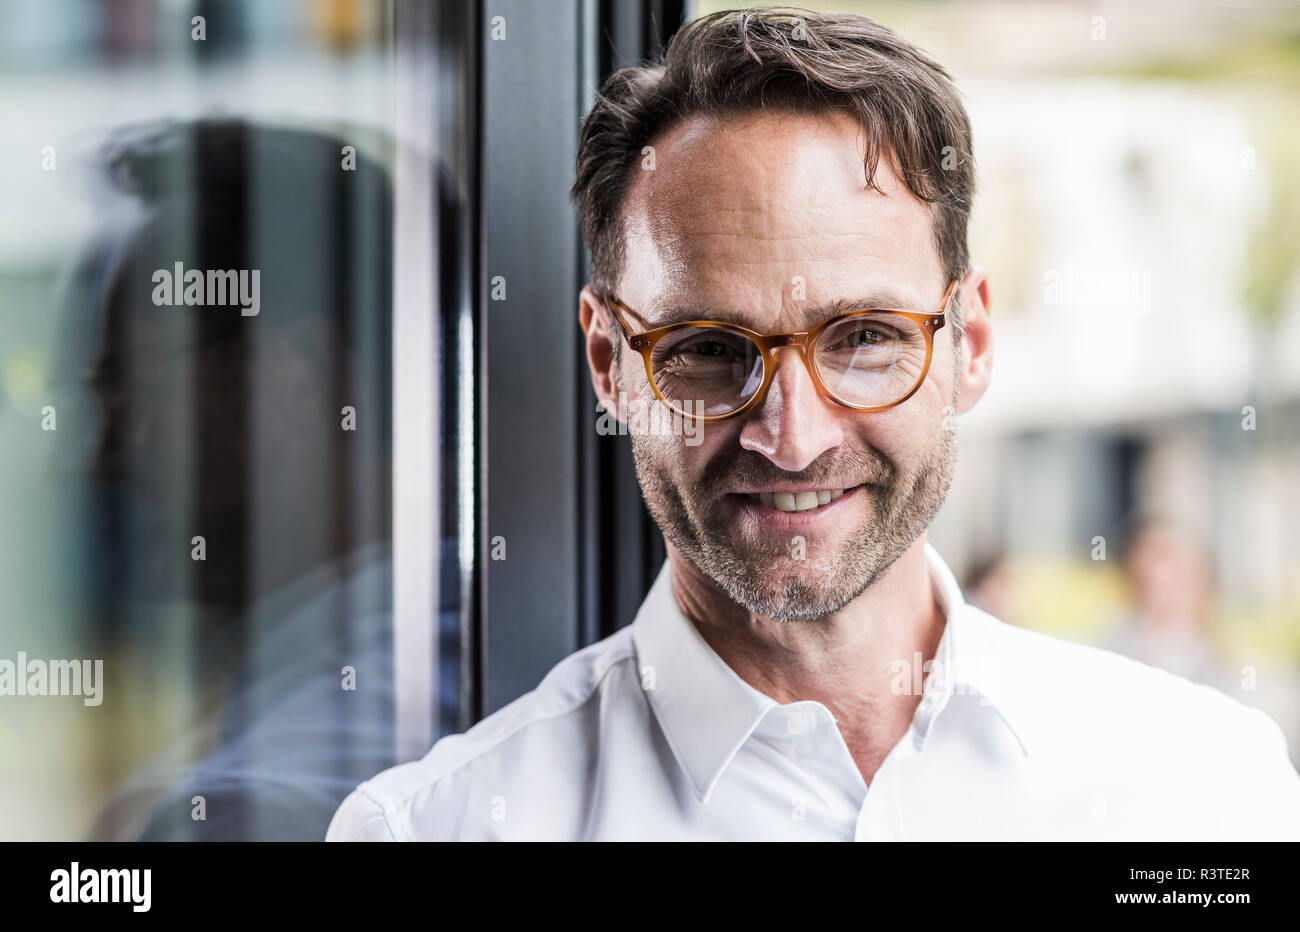 Portrait of smiling businessman wearing glasses Banque D'Images